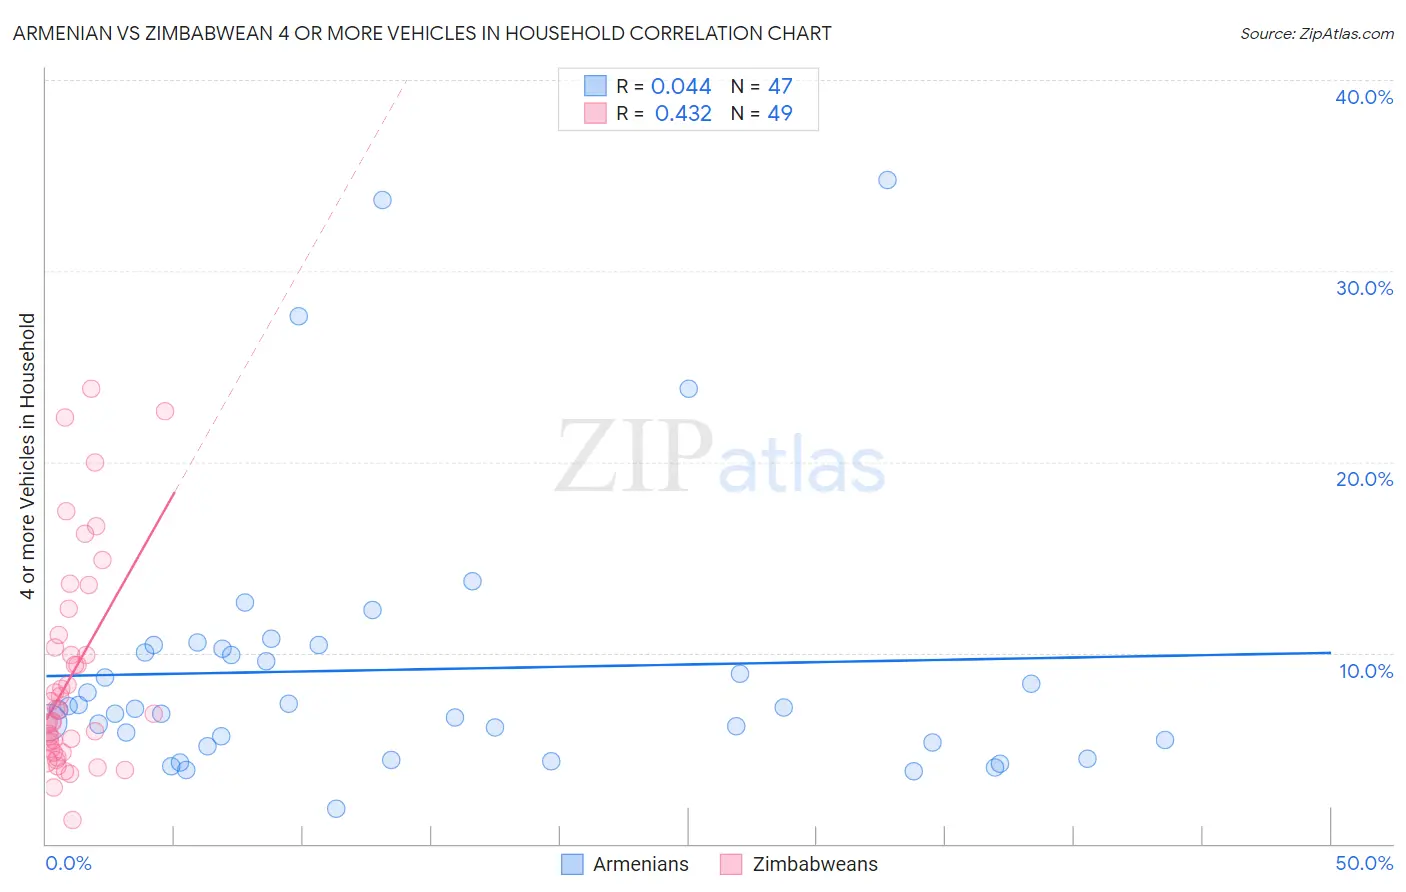 Armenian vs Zimbabwean 4 or more Vehicles in Household